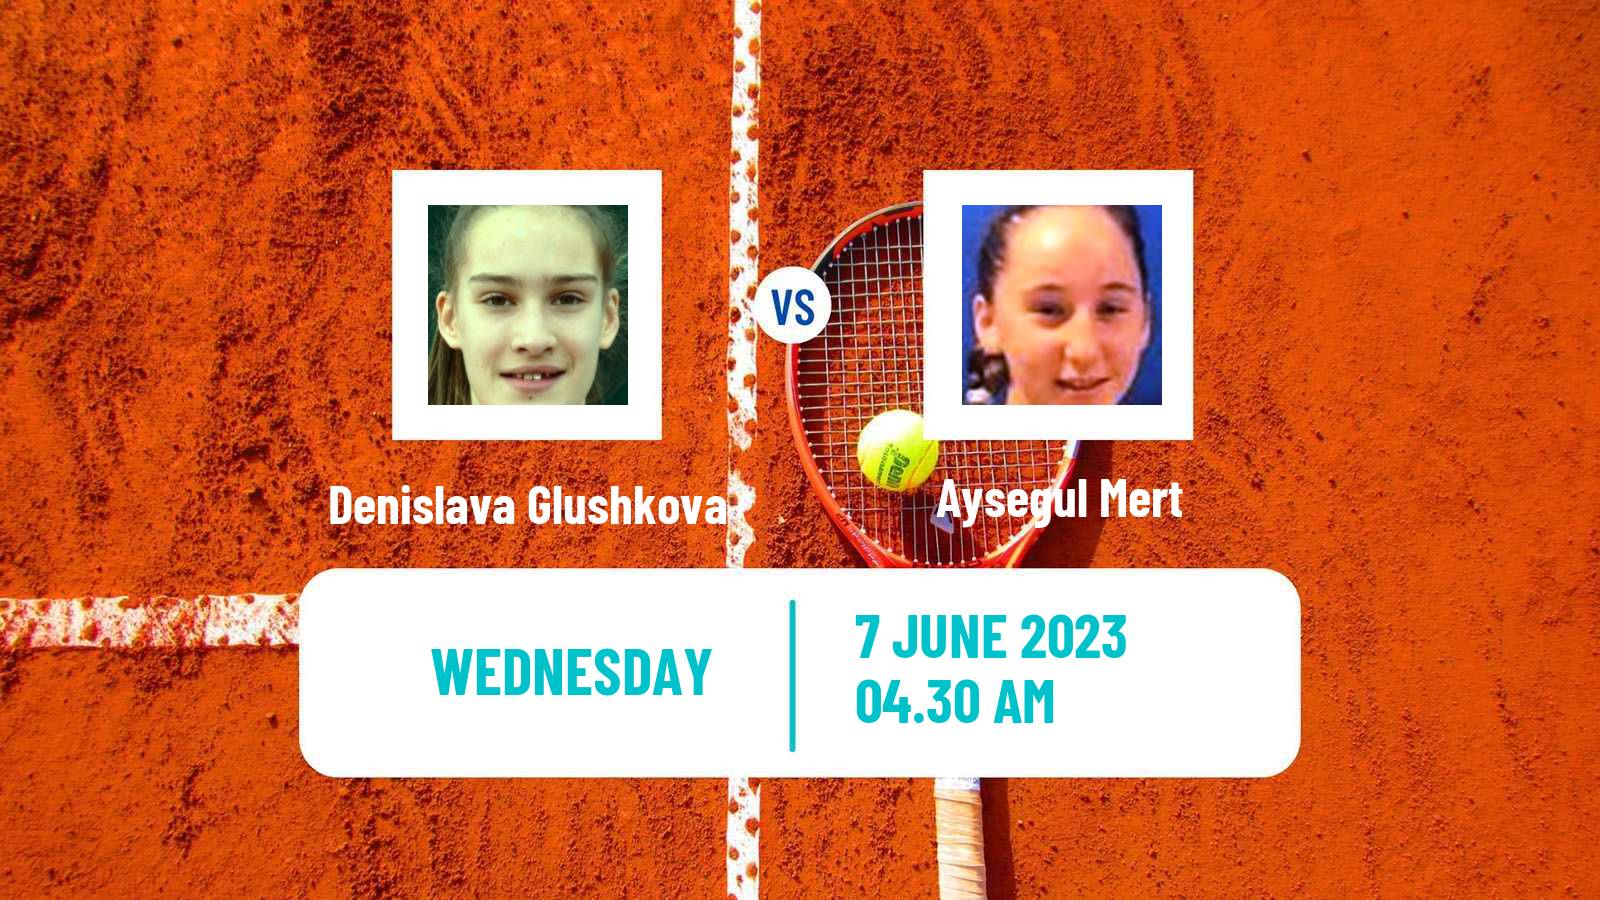 Tennis ITF W25 Kursumlijska Banja 2 Women Denislava Glushkova - Aysegul Mert